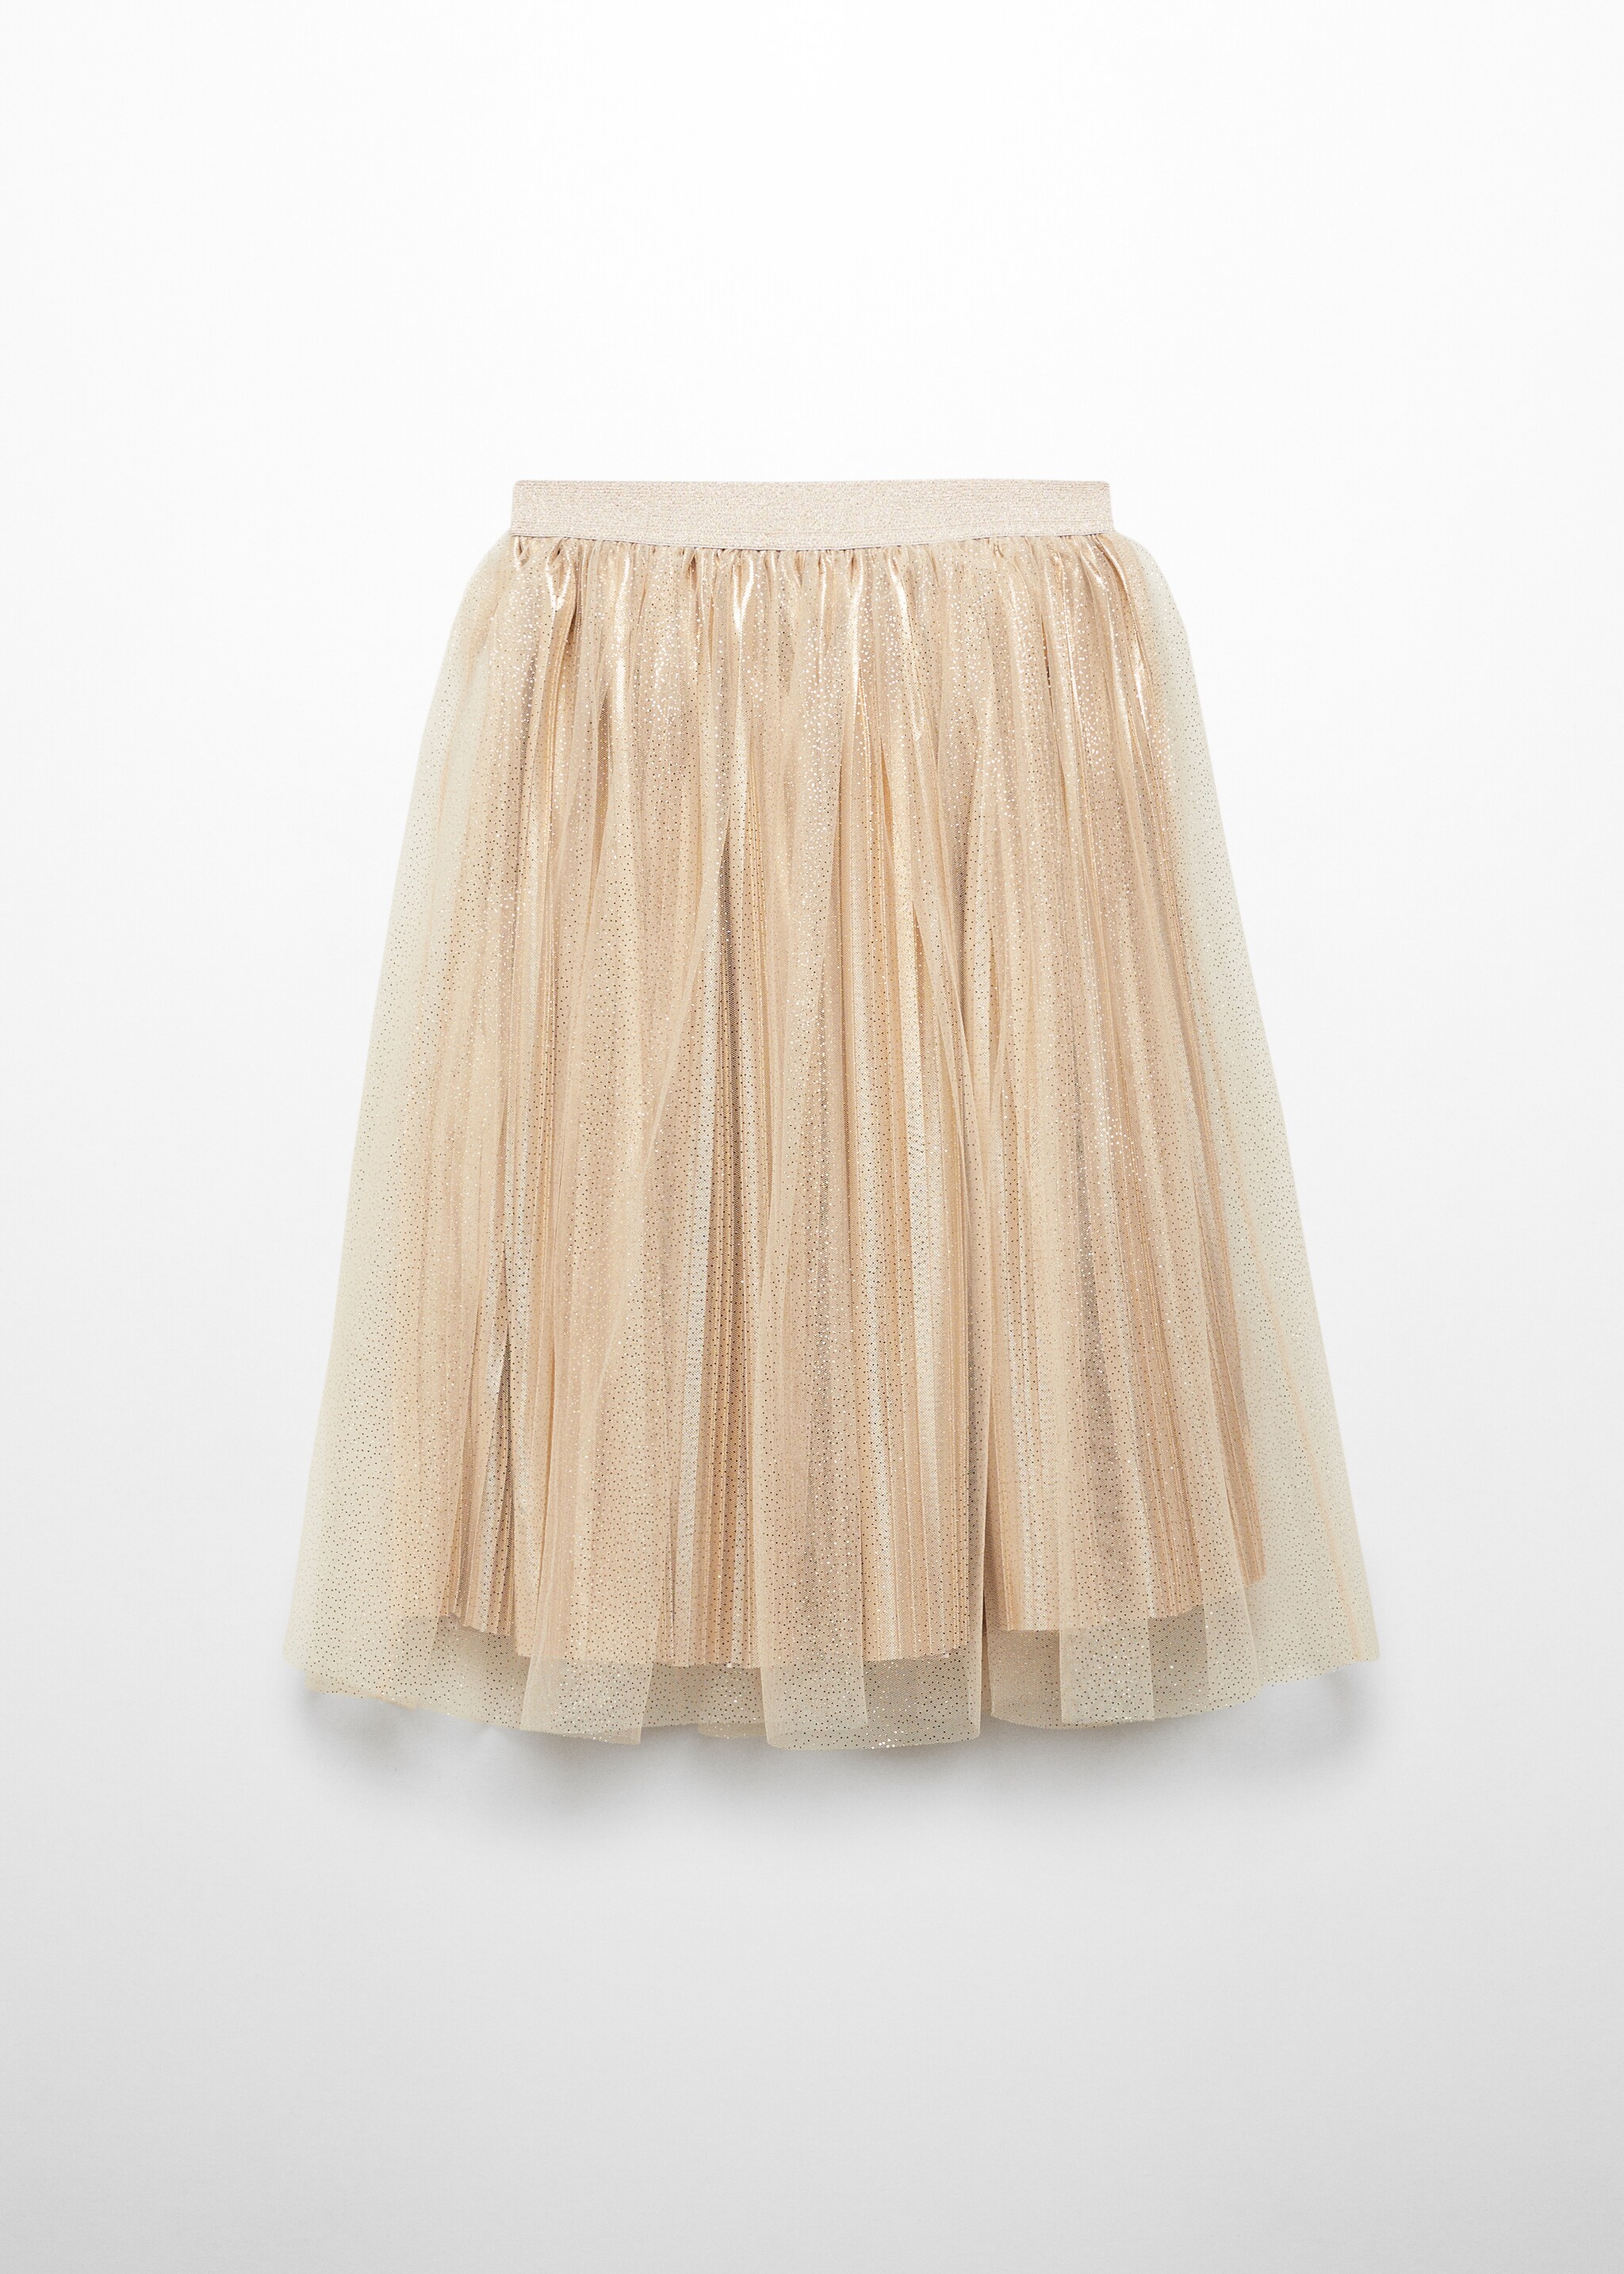 Metallic tulle skirt - Reverse of the article